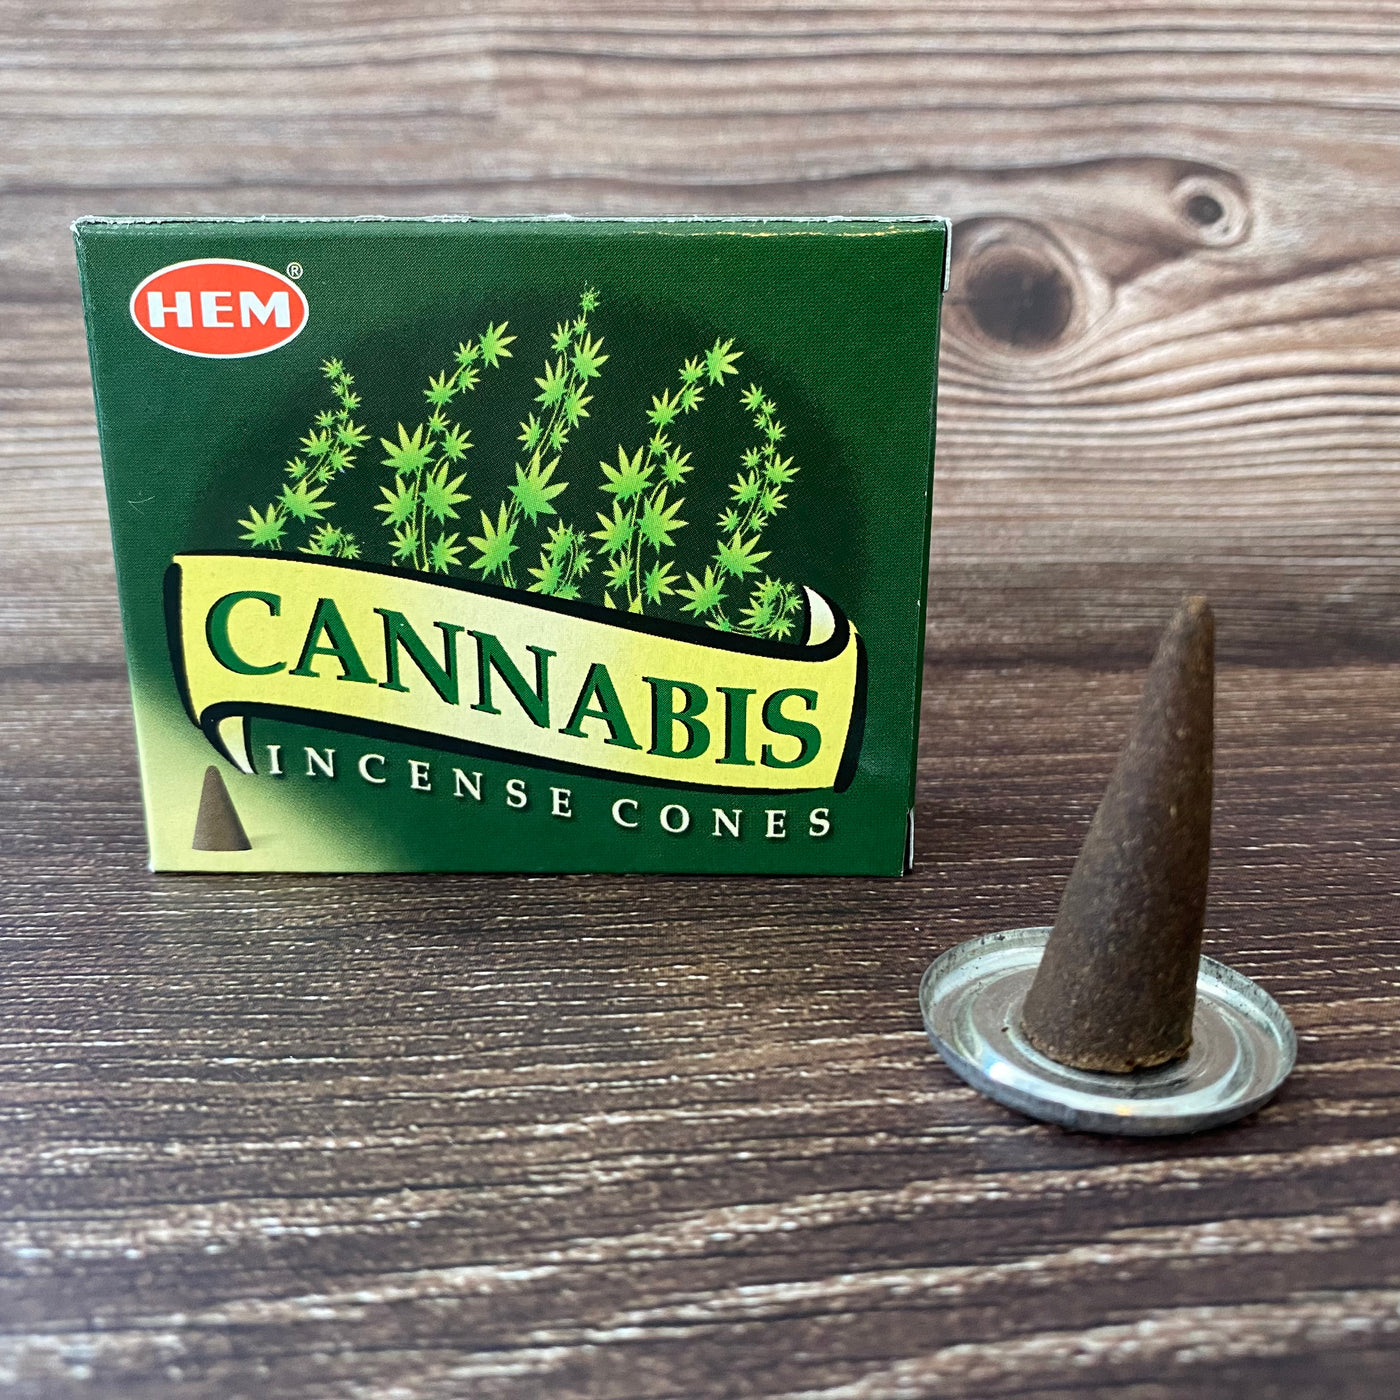 HEM - Cannabis Cone Incense (10 pack)